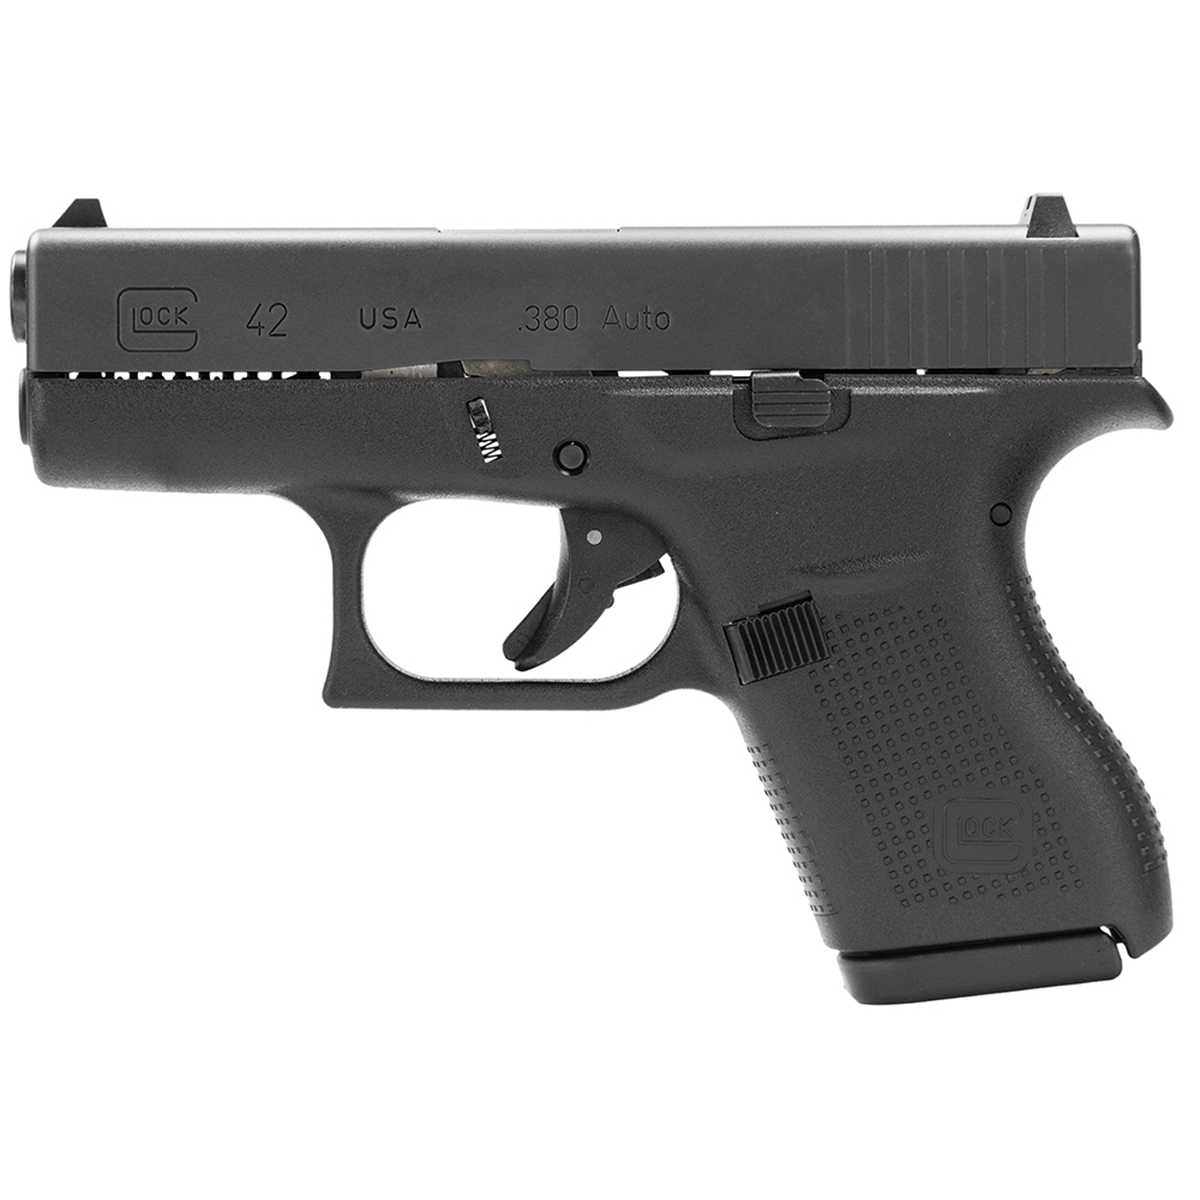 Glock 42 G42 .380 Gen3 Subcompact Pistol US Made UI4250201